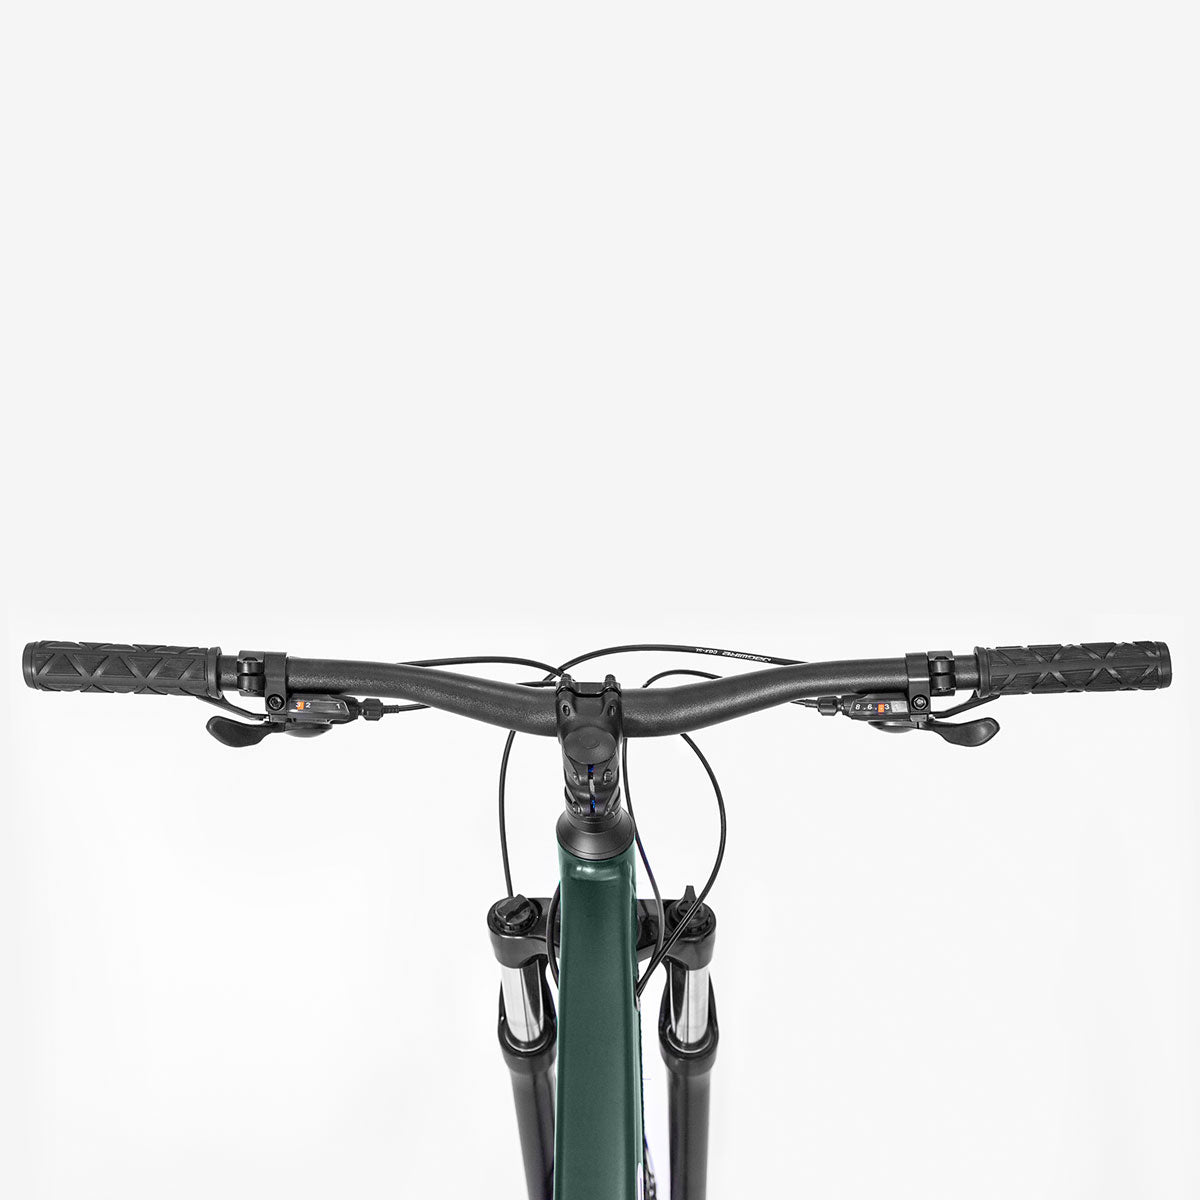 Vantage Hardtail Mountain Bike in British Racing Green